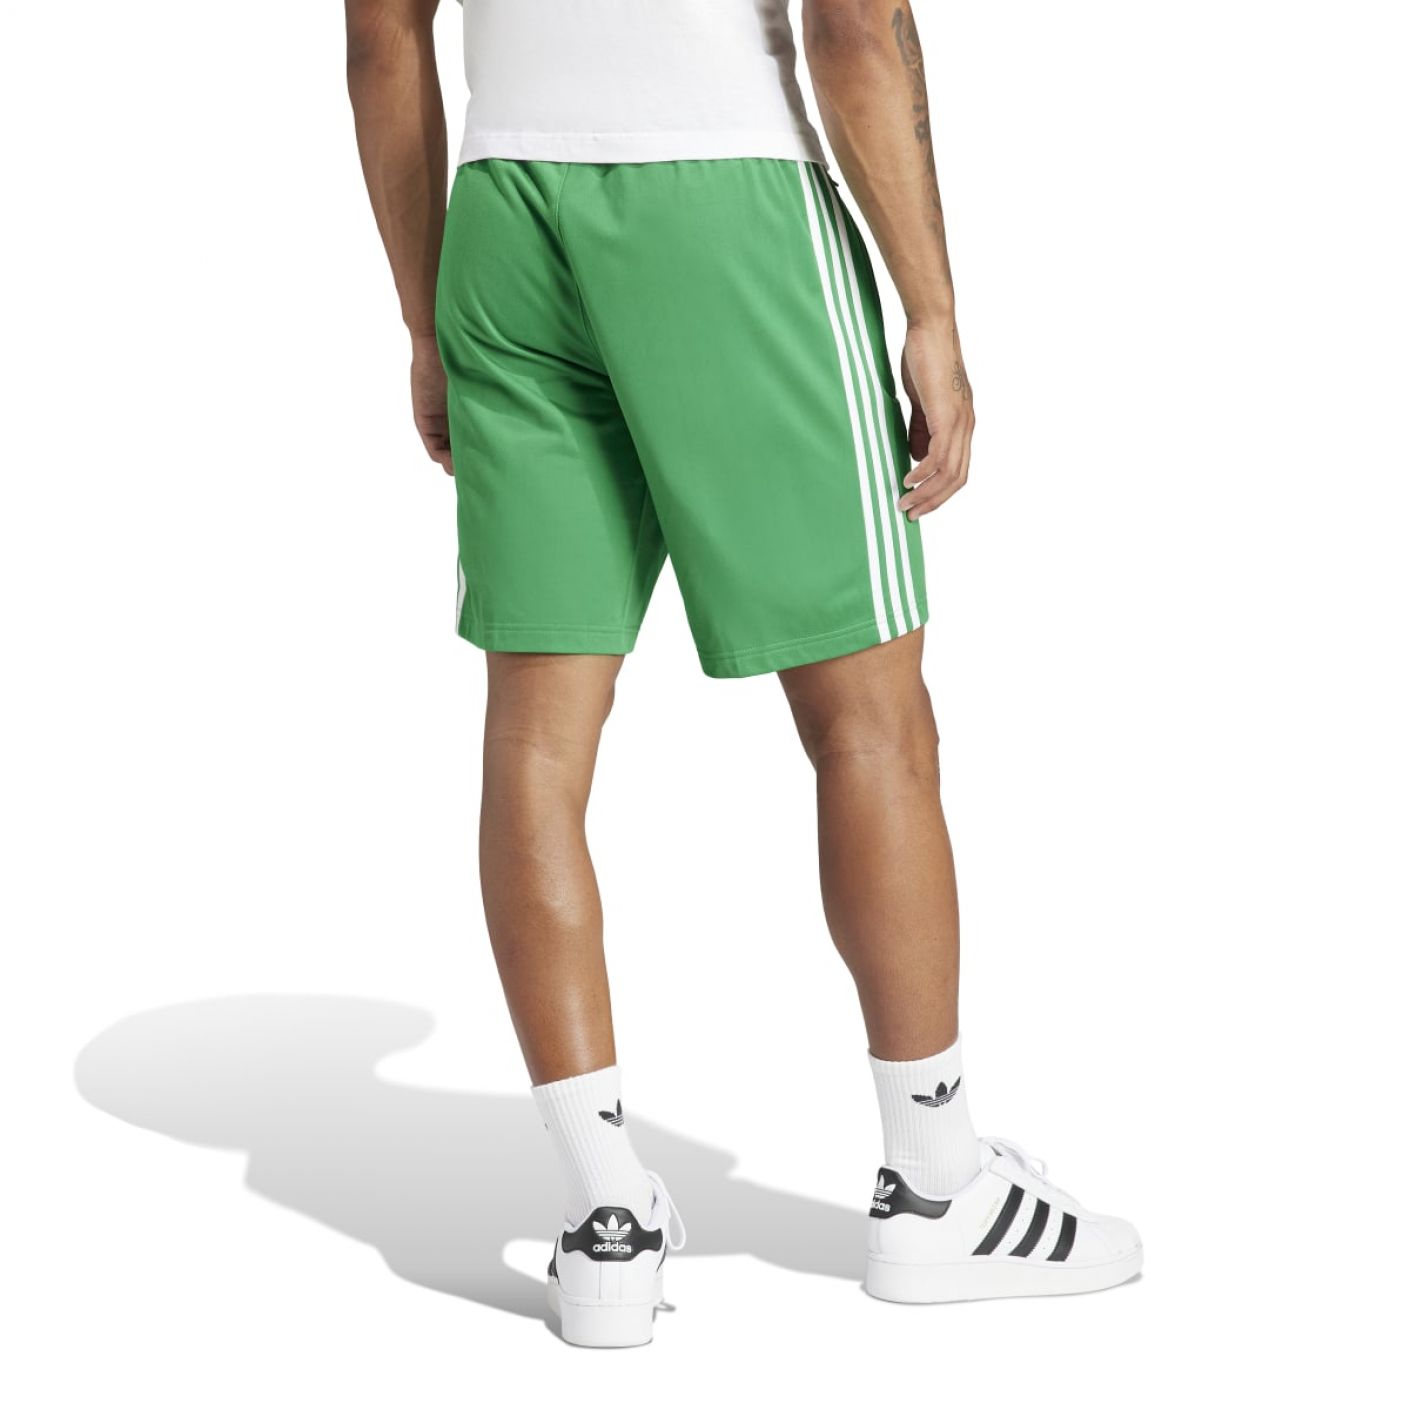 Adidas Short Firebird Verde/Bianco da Uomo